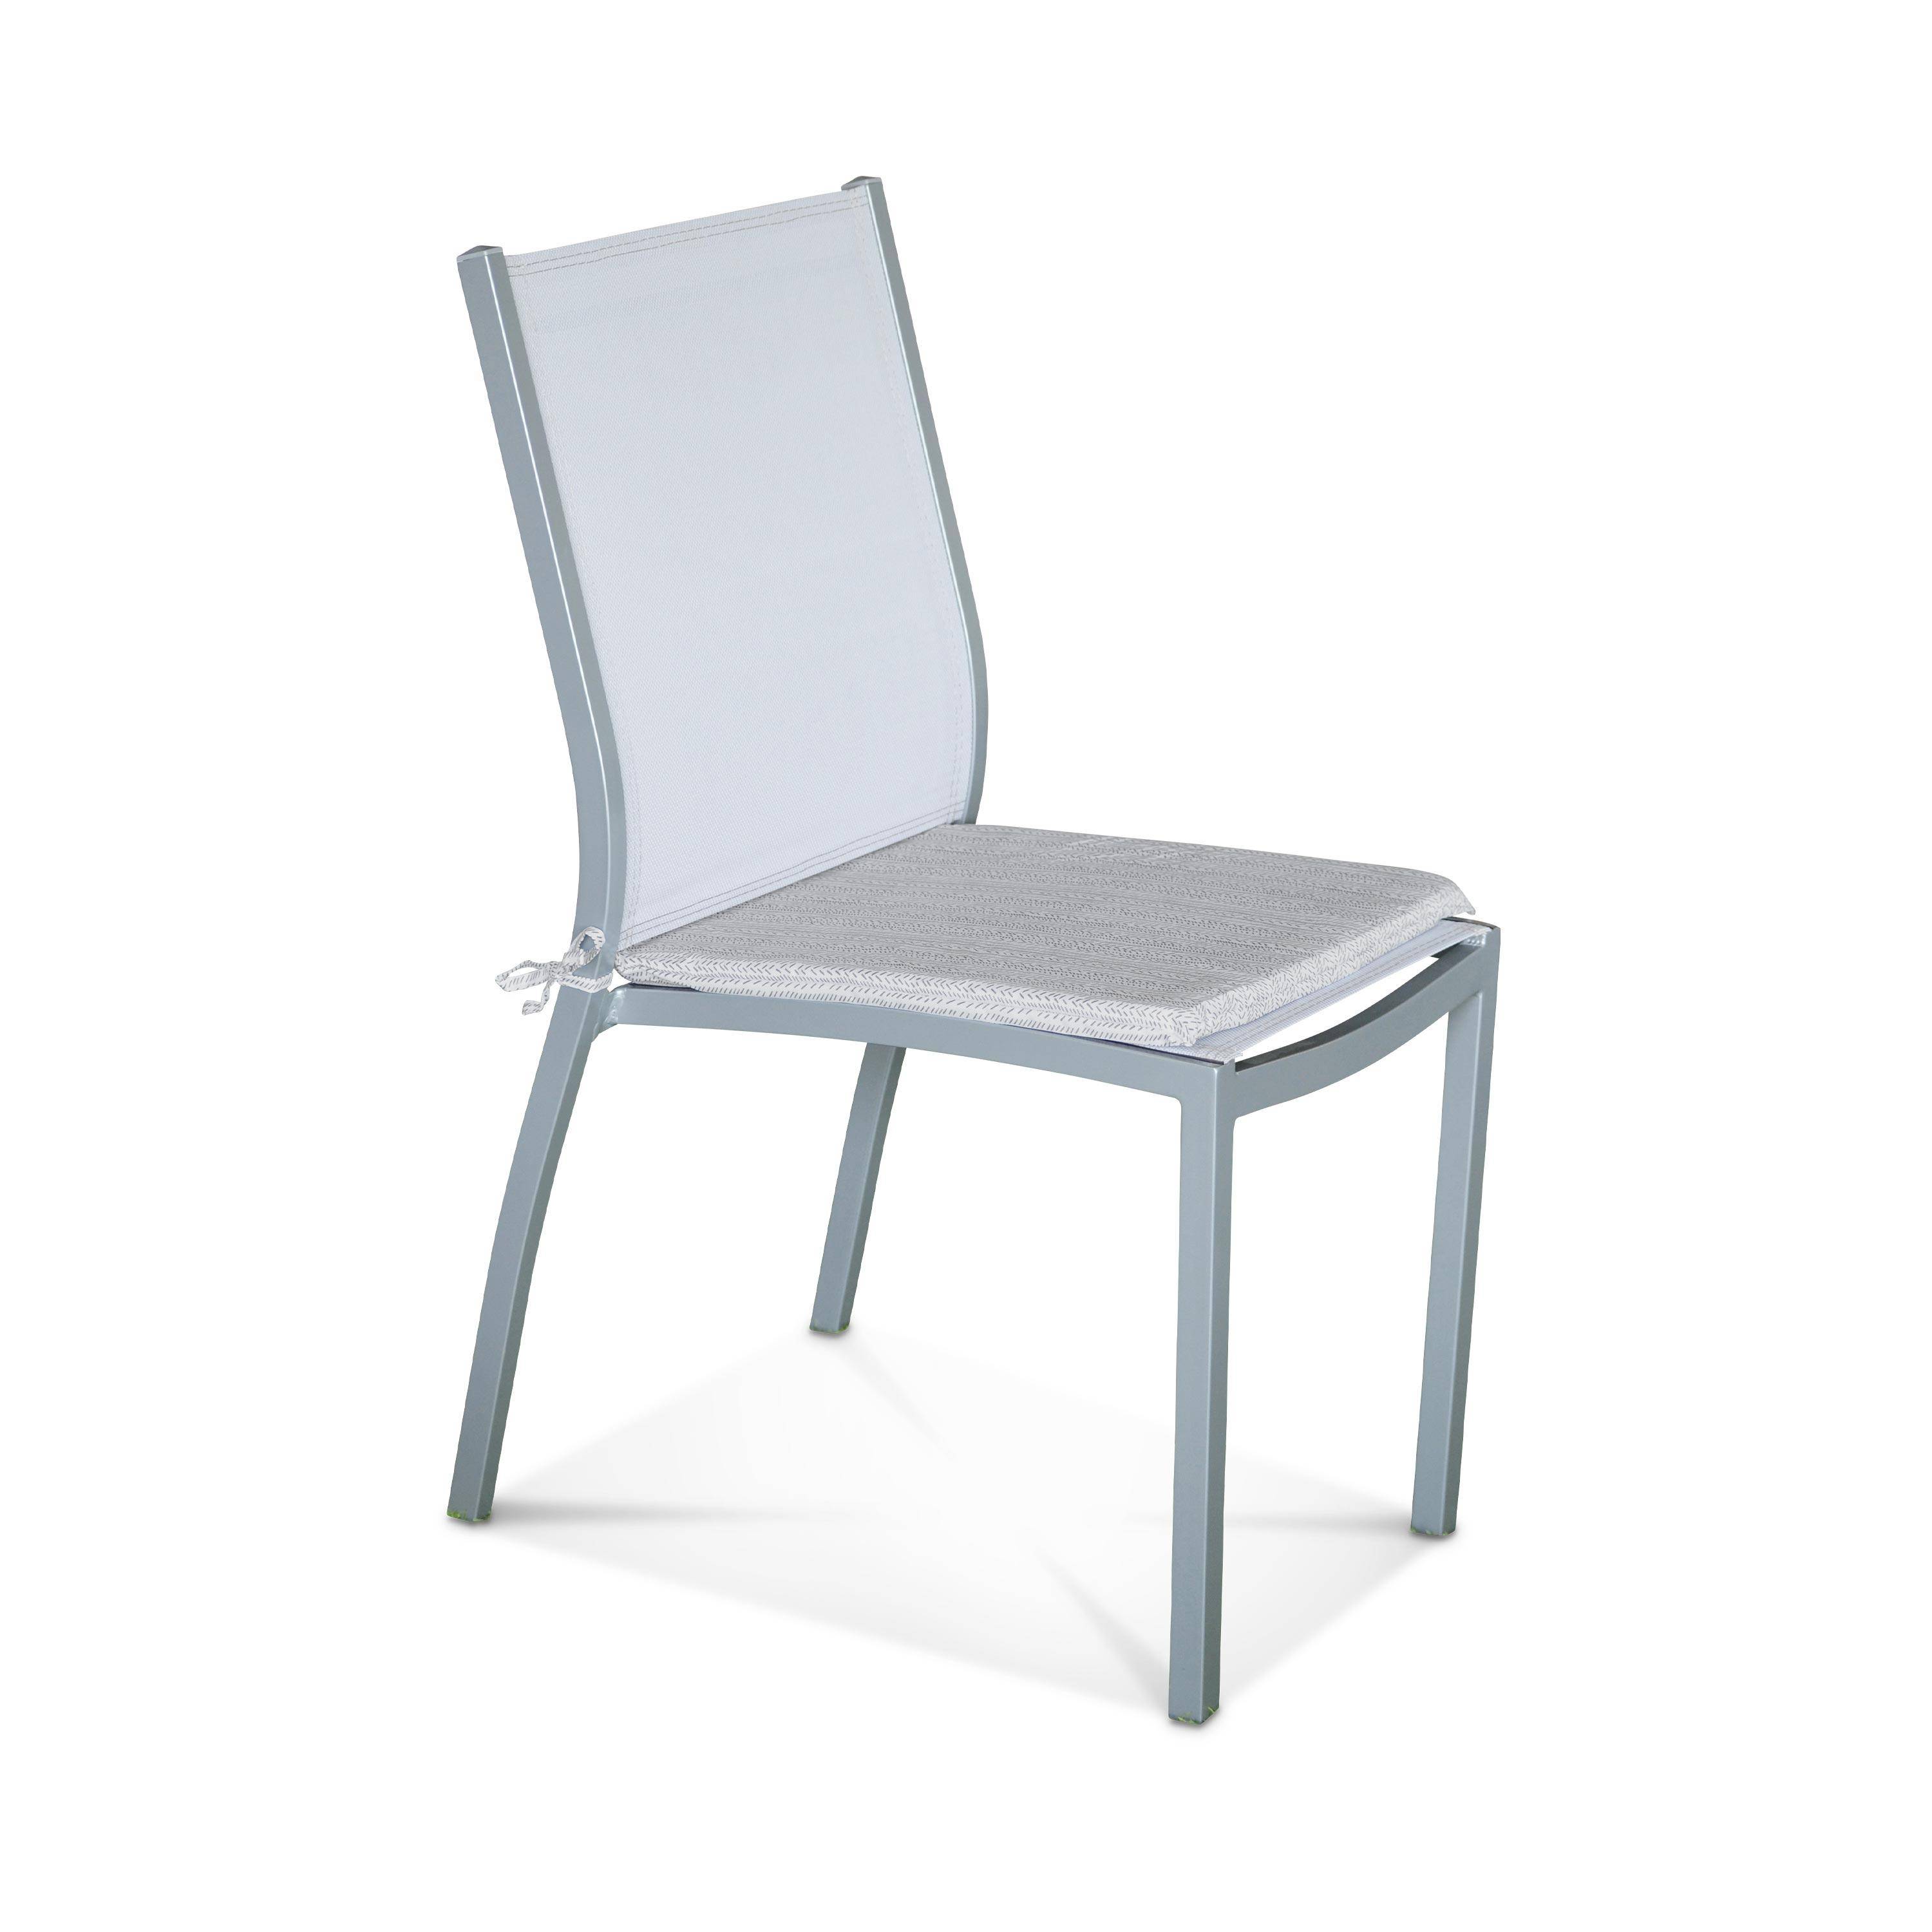 Set van 4 stoelkussens - 43 x 40 cm - waterafstotende stof, omkeerbaar, anti-UV, met bevestigingskoordjes, grijs zigzag motief Photo2